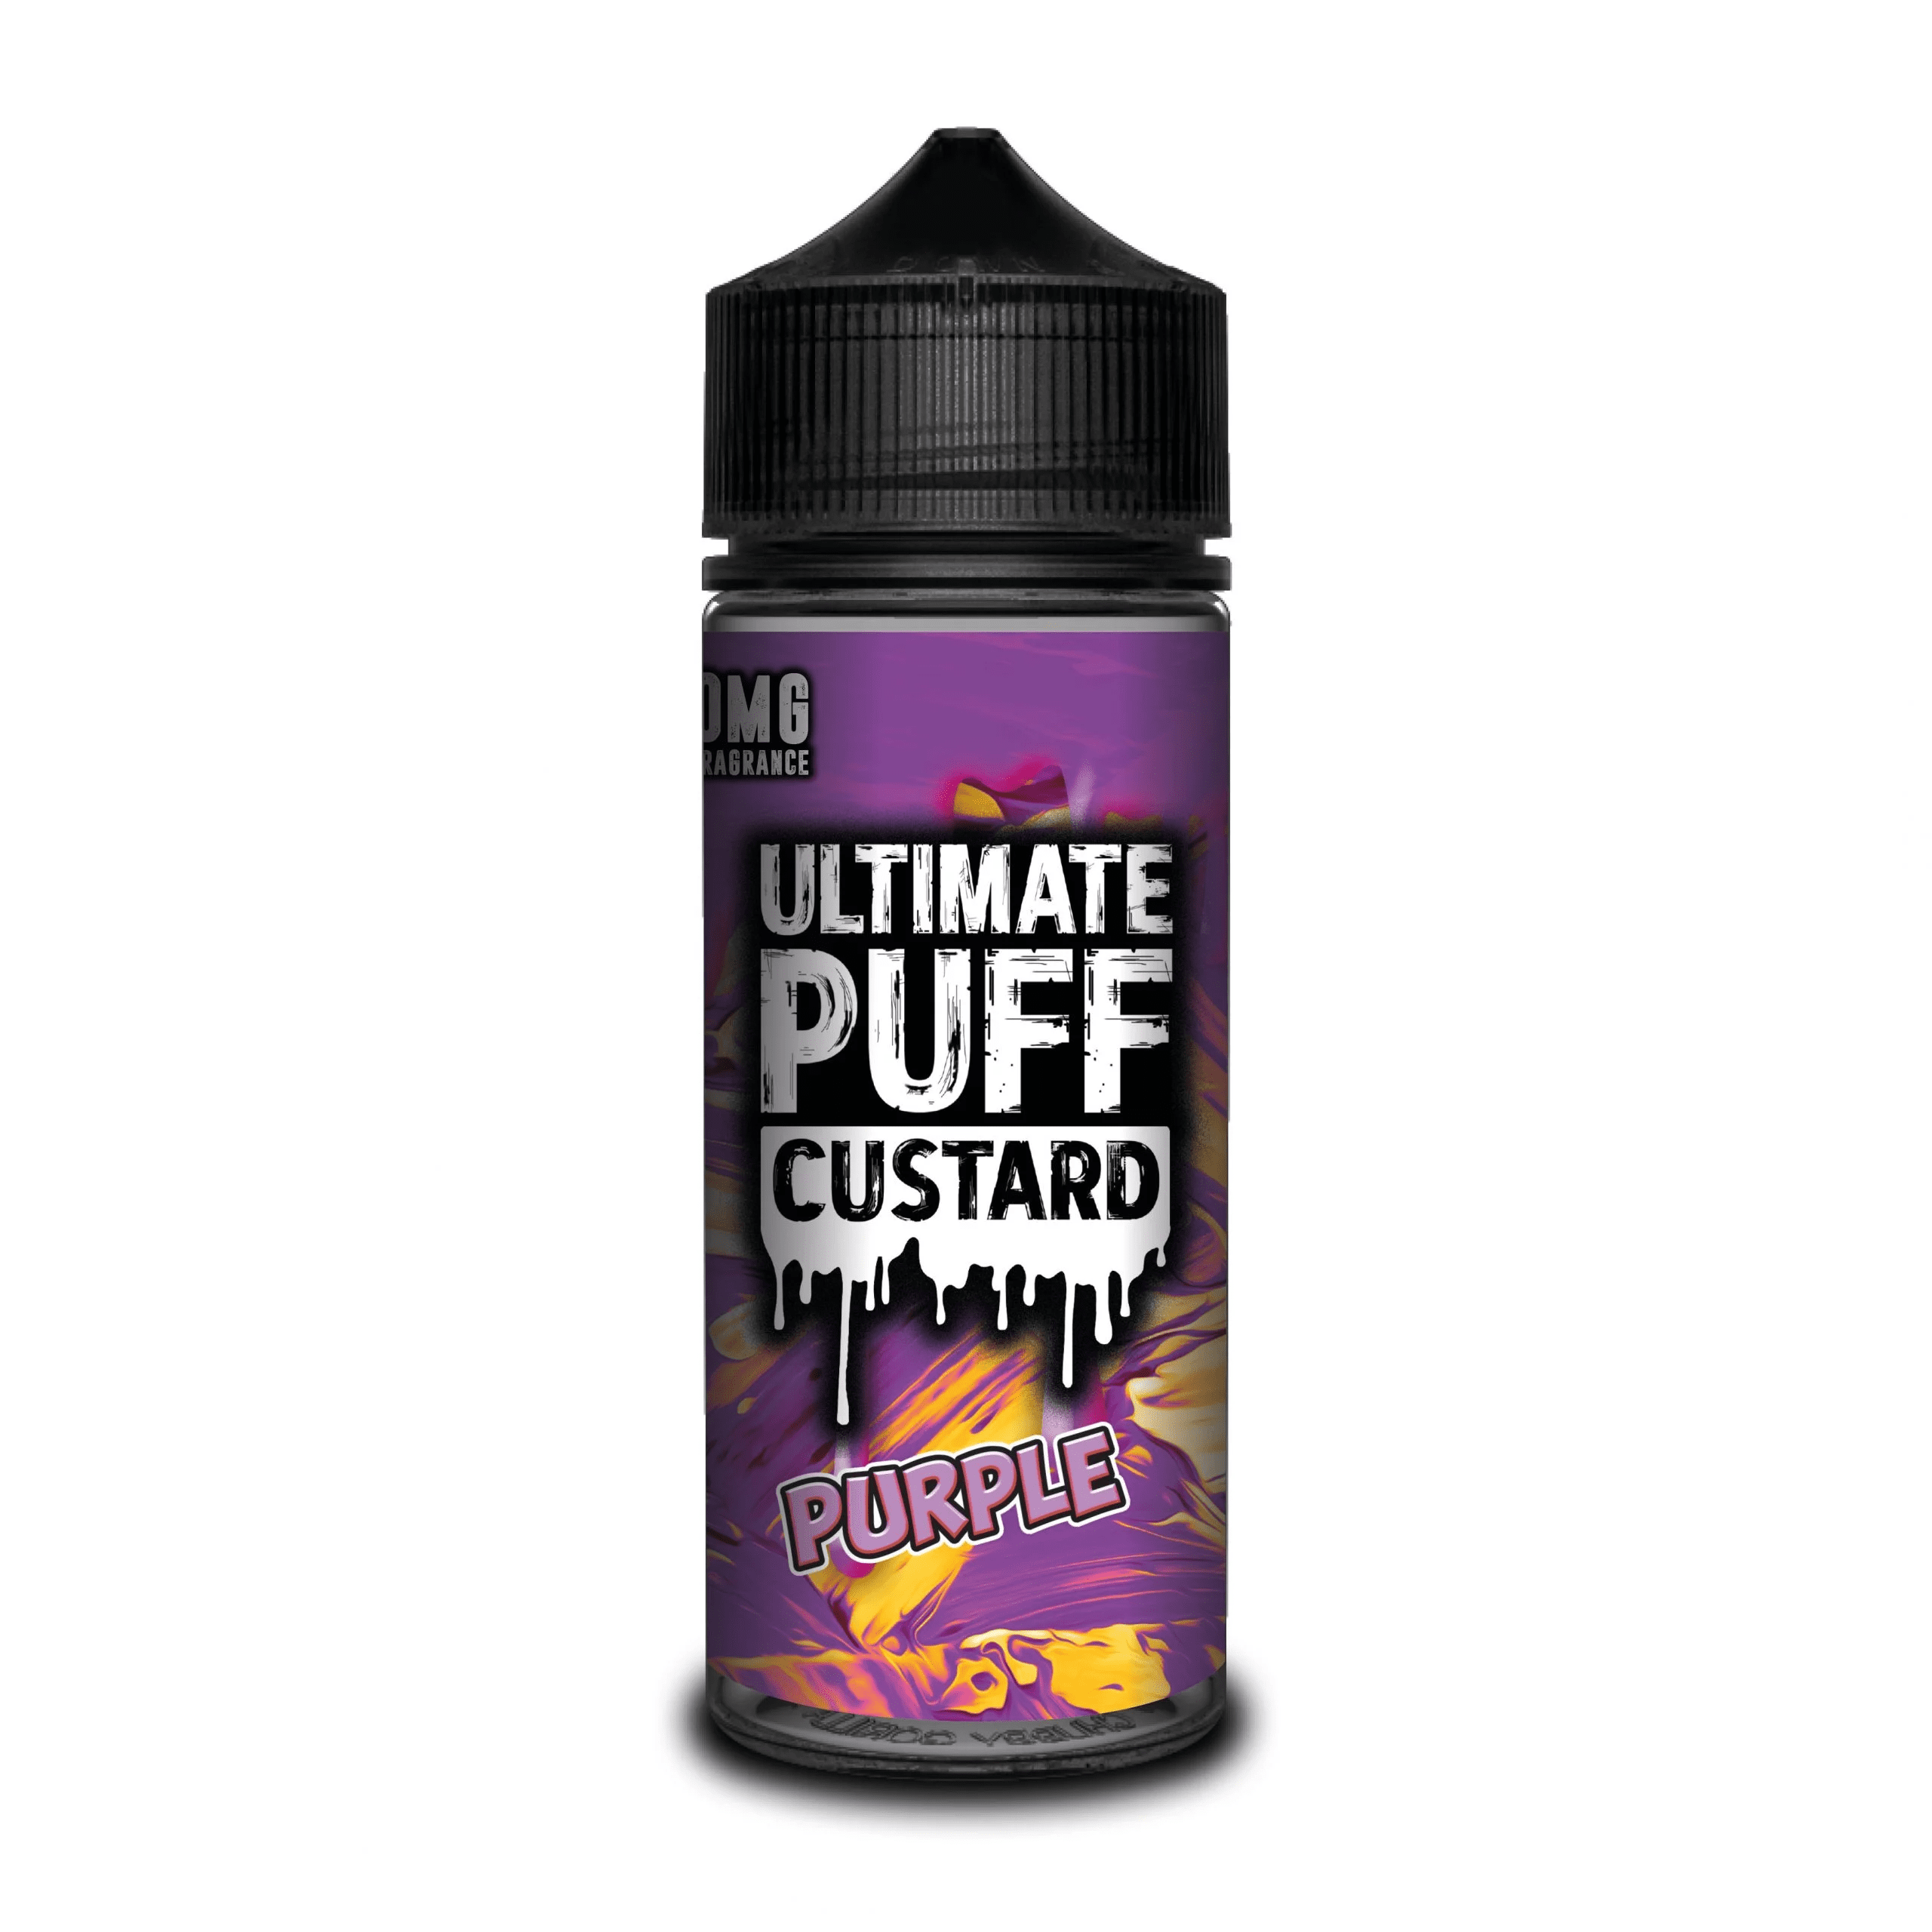  Ultimate Puff Custard - Purple - 100ml 